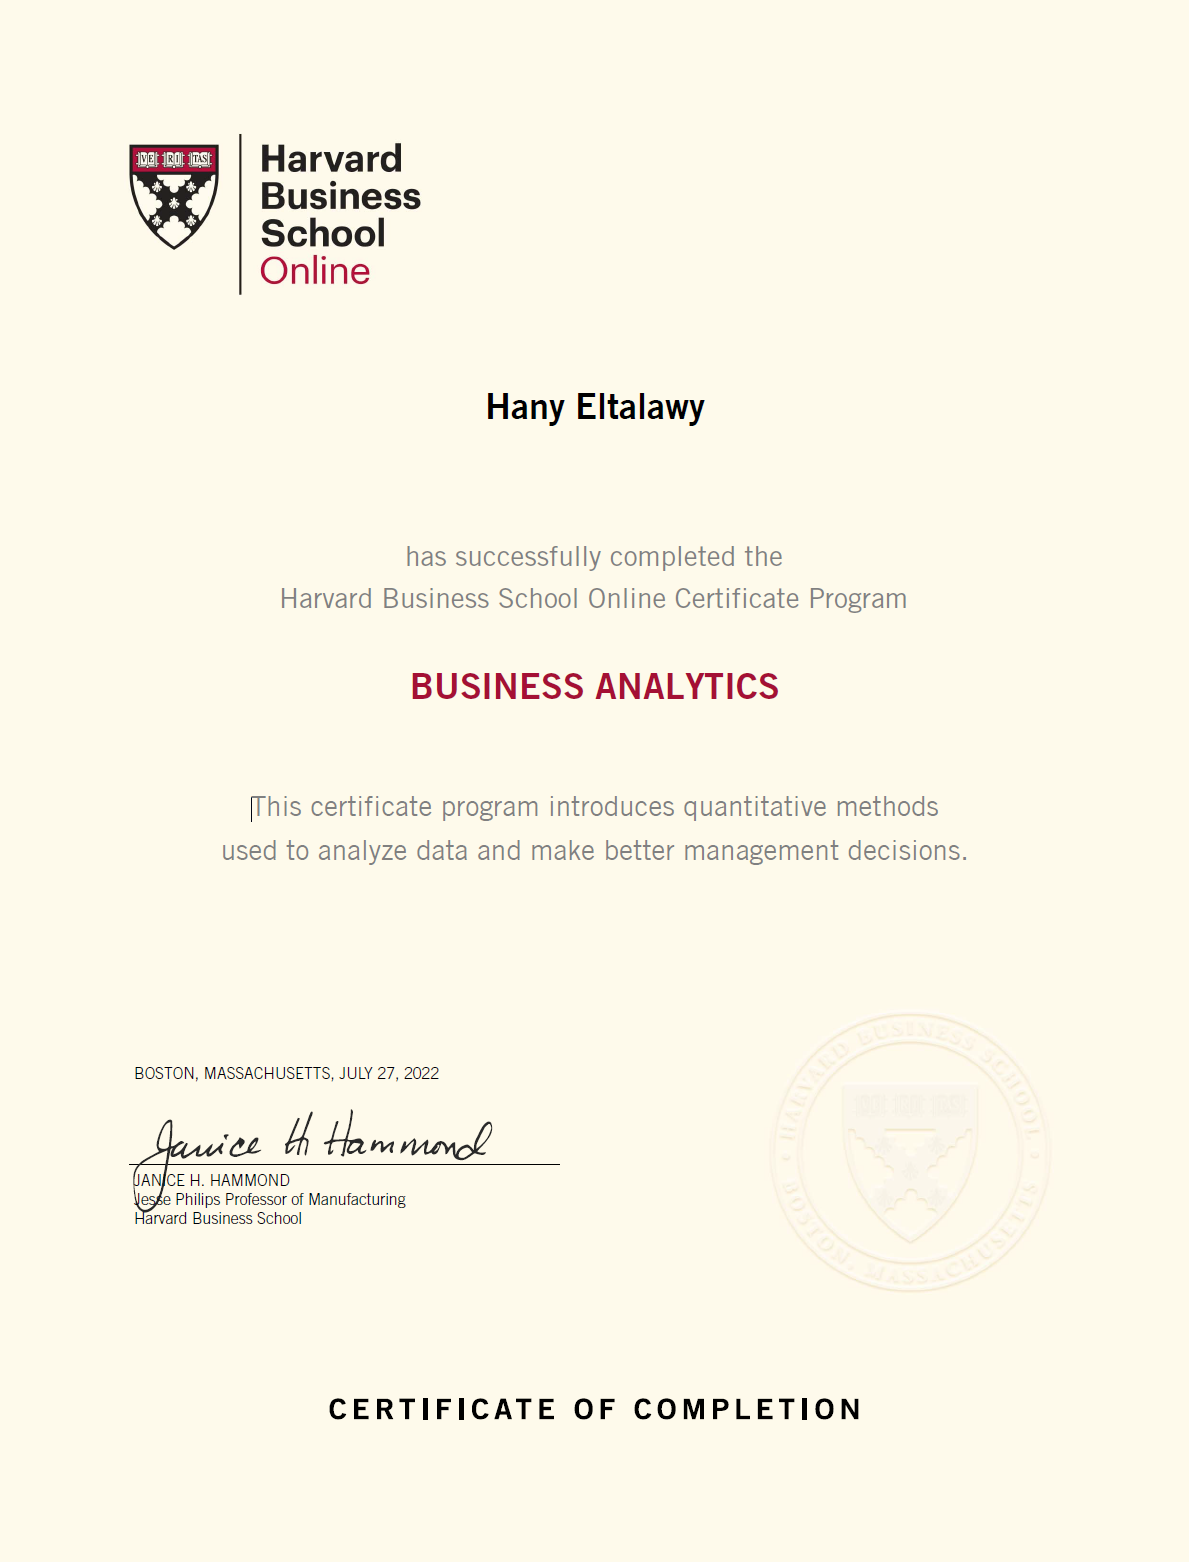 Business Analytics Certificate